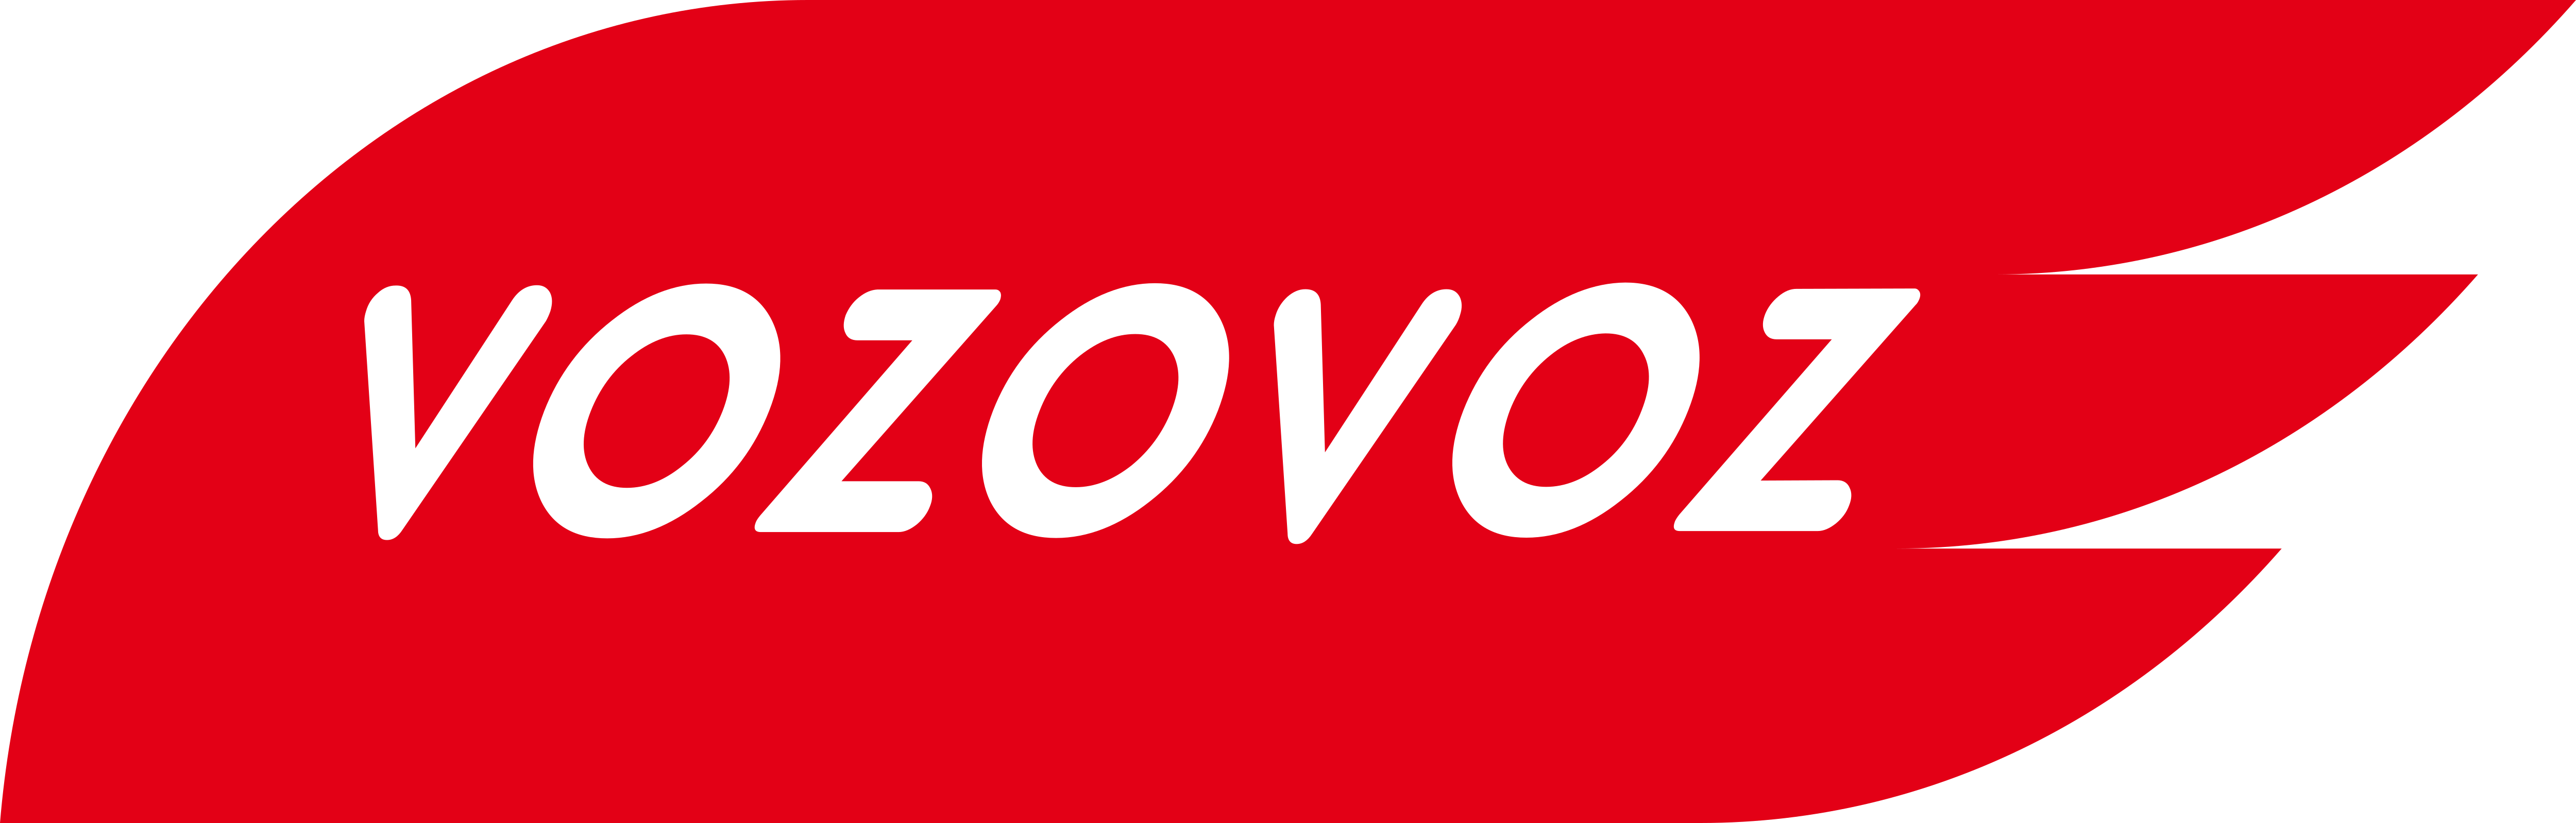 Возовоз тк транспортная. Возовоз логотип. ООО Возовоз. Vozovoz транспортная компания. Логотип транспортной компании.